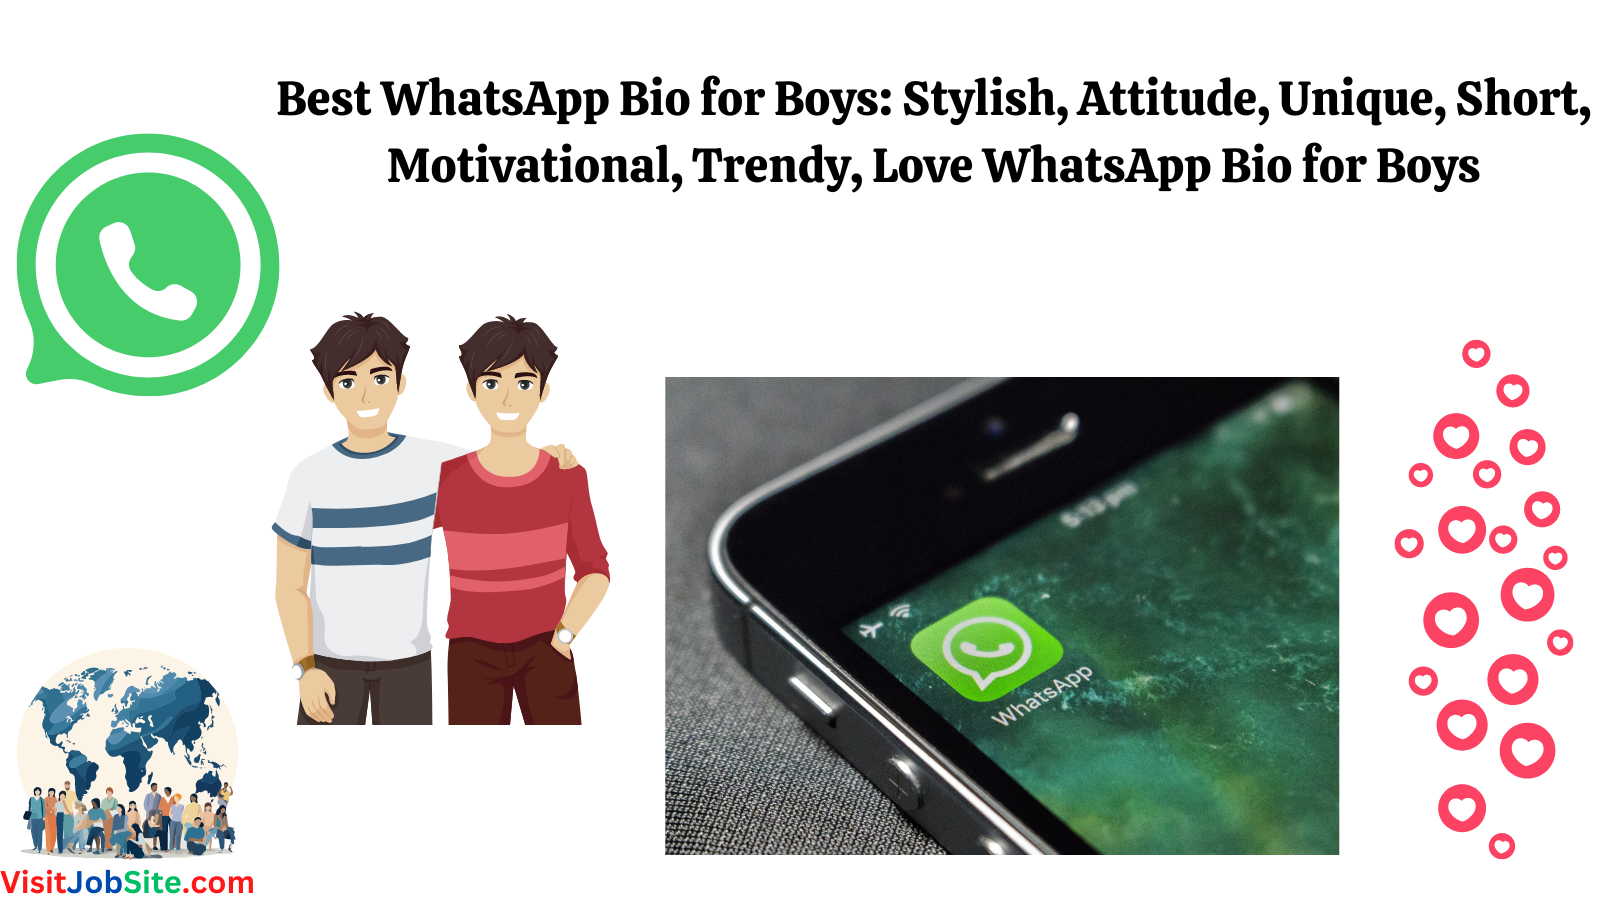 Best WhatsApp Bio for Boys: Stylish, Attitude, Unique, Short, Motivational, Trendy and Love